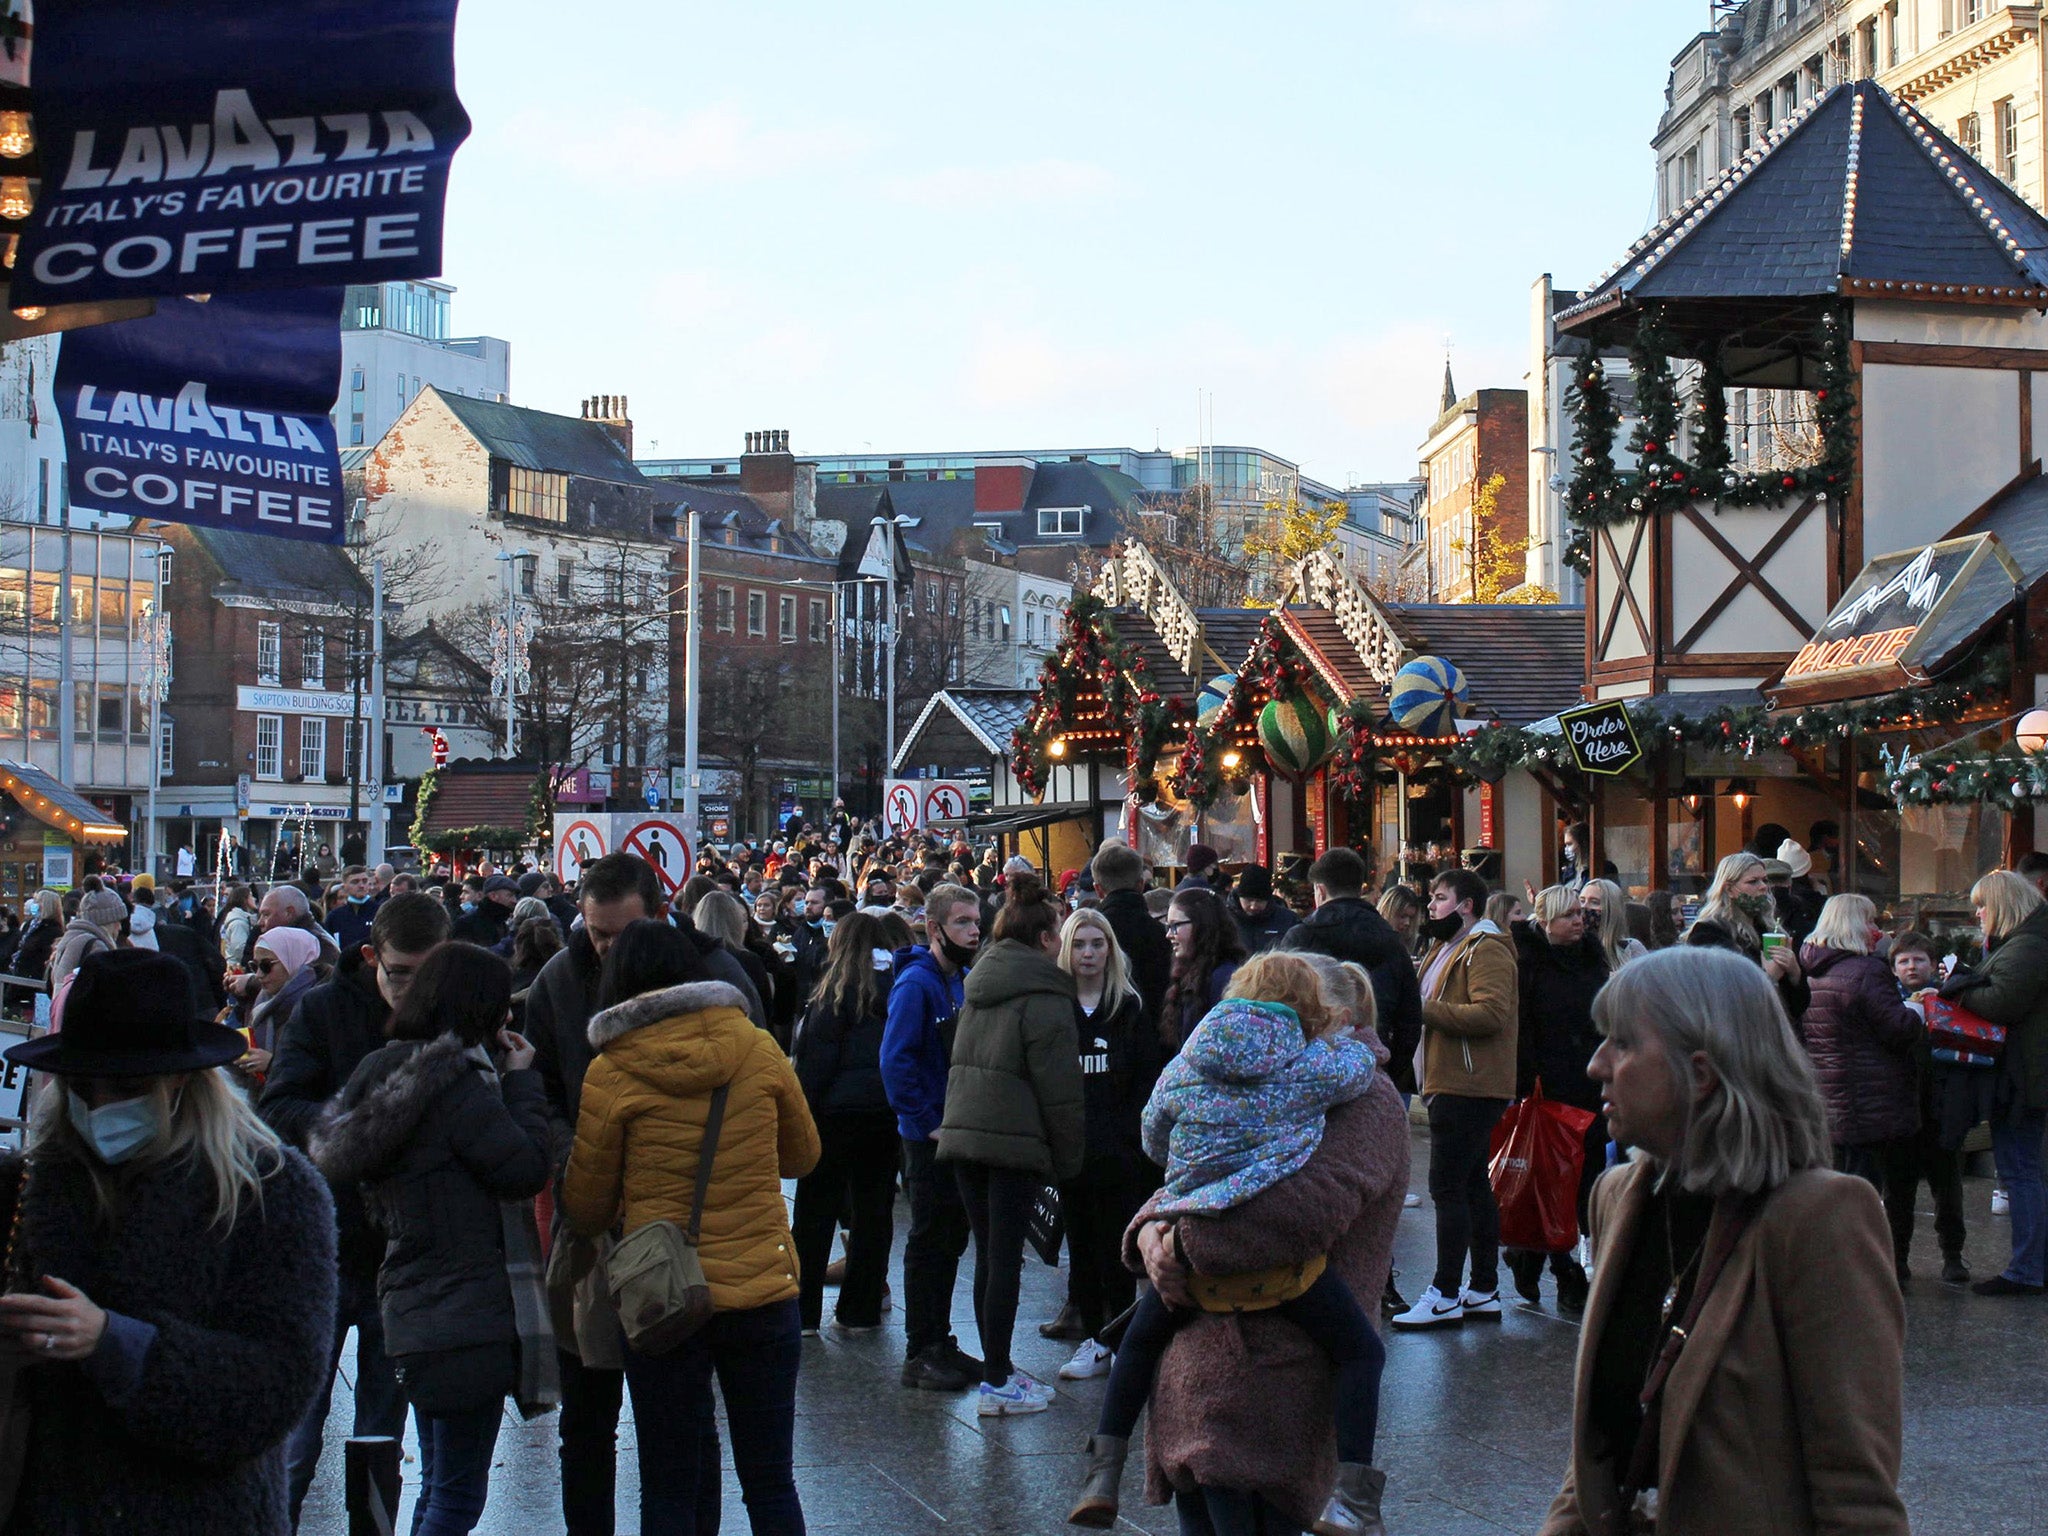 Large crowds descended on Nottingham’s Old Market Square on Saturday